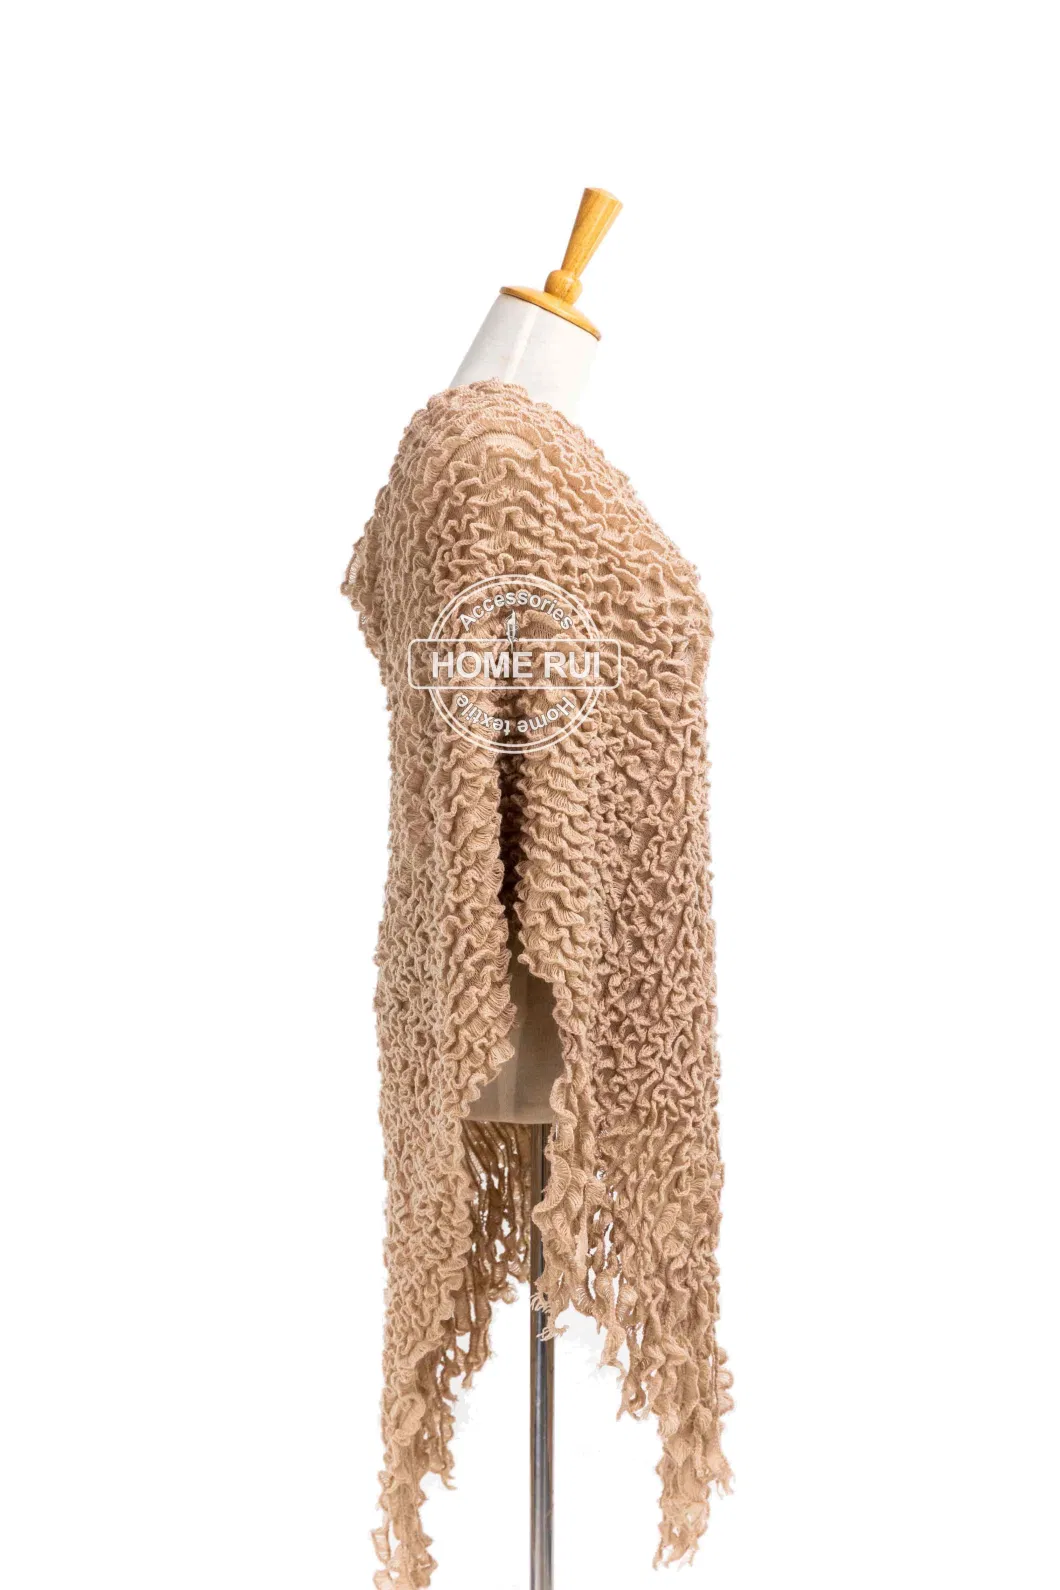 Spring Autumn Woman Lady Warm Fashion Warp Knitting Fabric Beige Camel Colour Pullover Oversize Wraps Ruffled Shawl Poncho